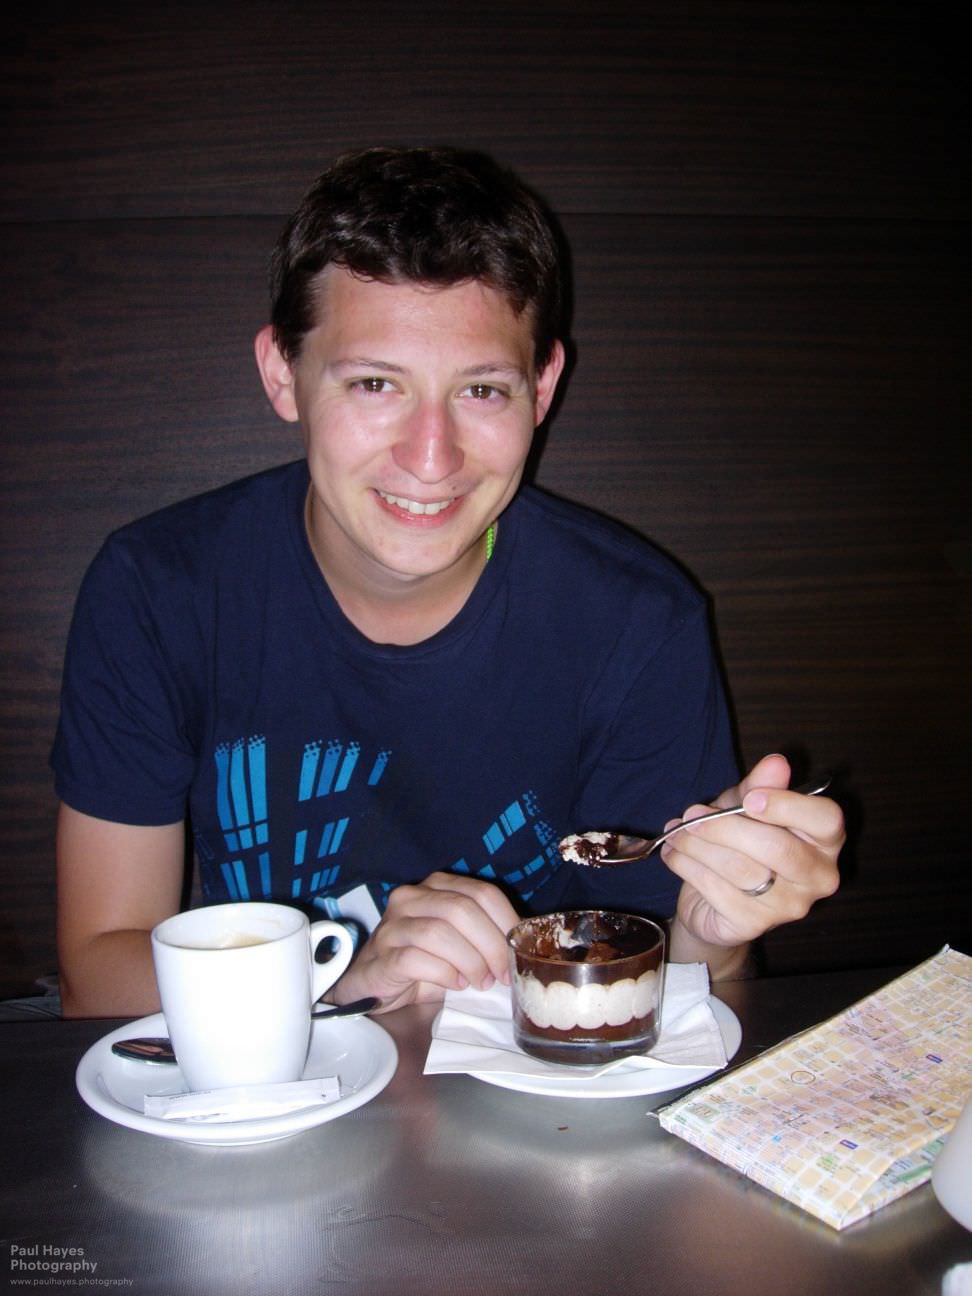 Paul with his almond chocolate dessert